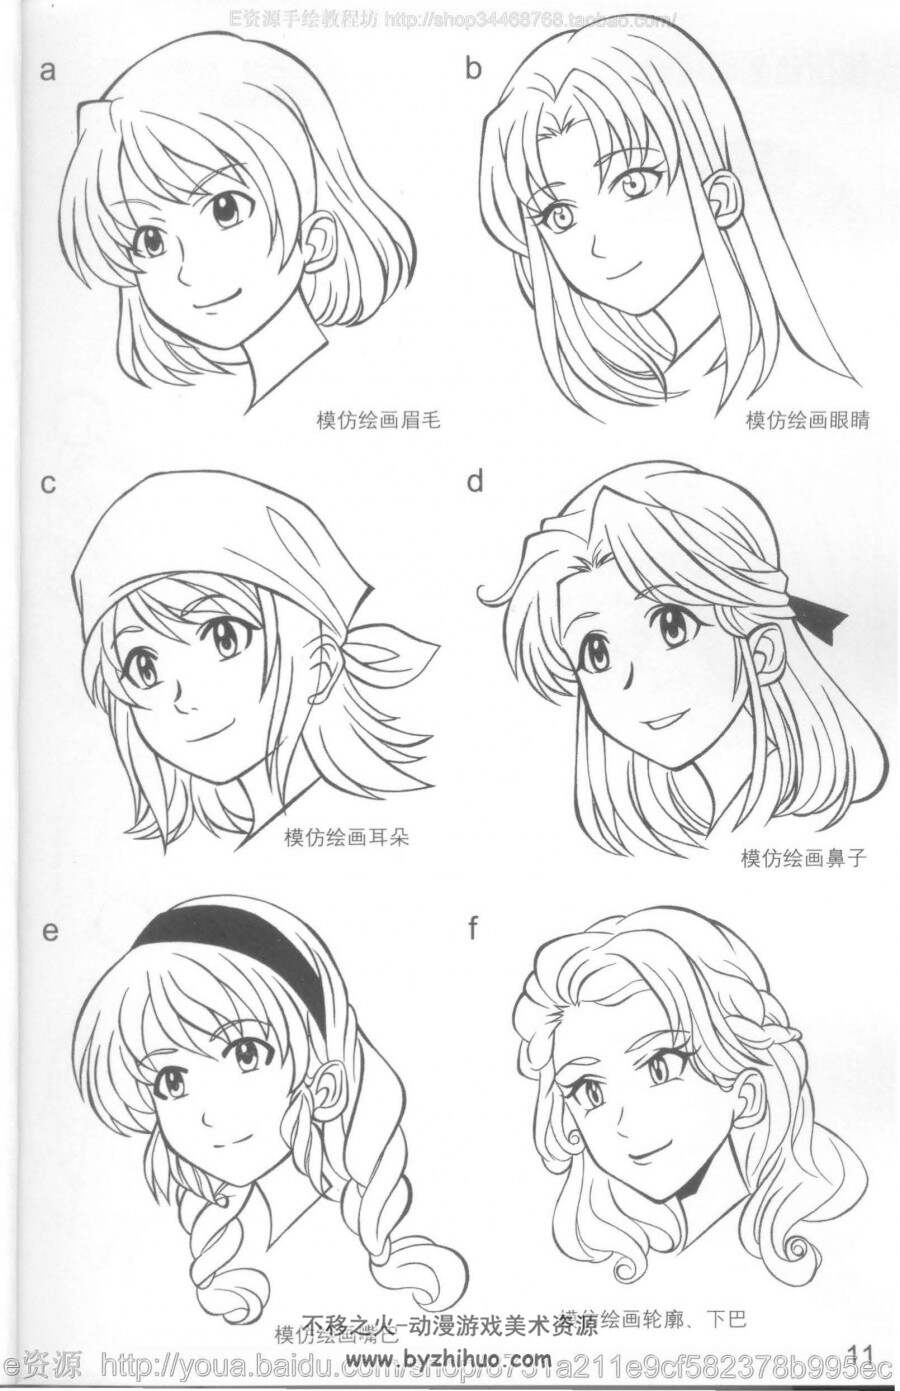 漫画技法终极向导 1-6册 How to Draw Manga Ultimate Manga Lessons